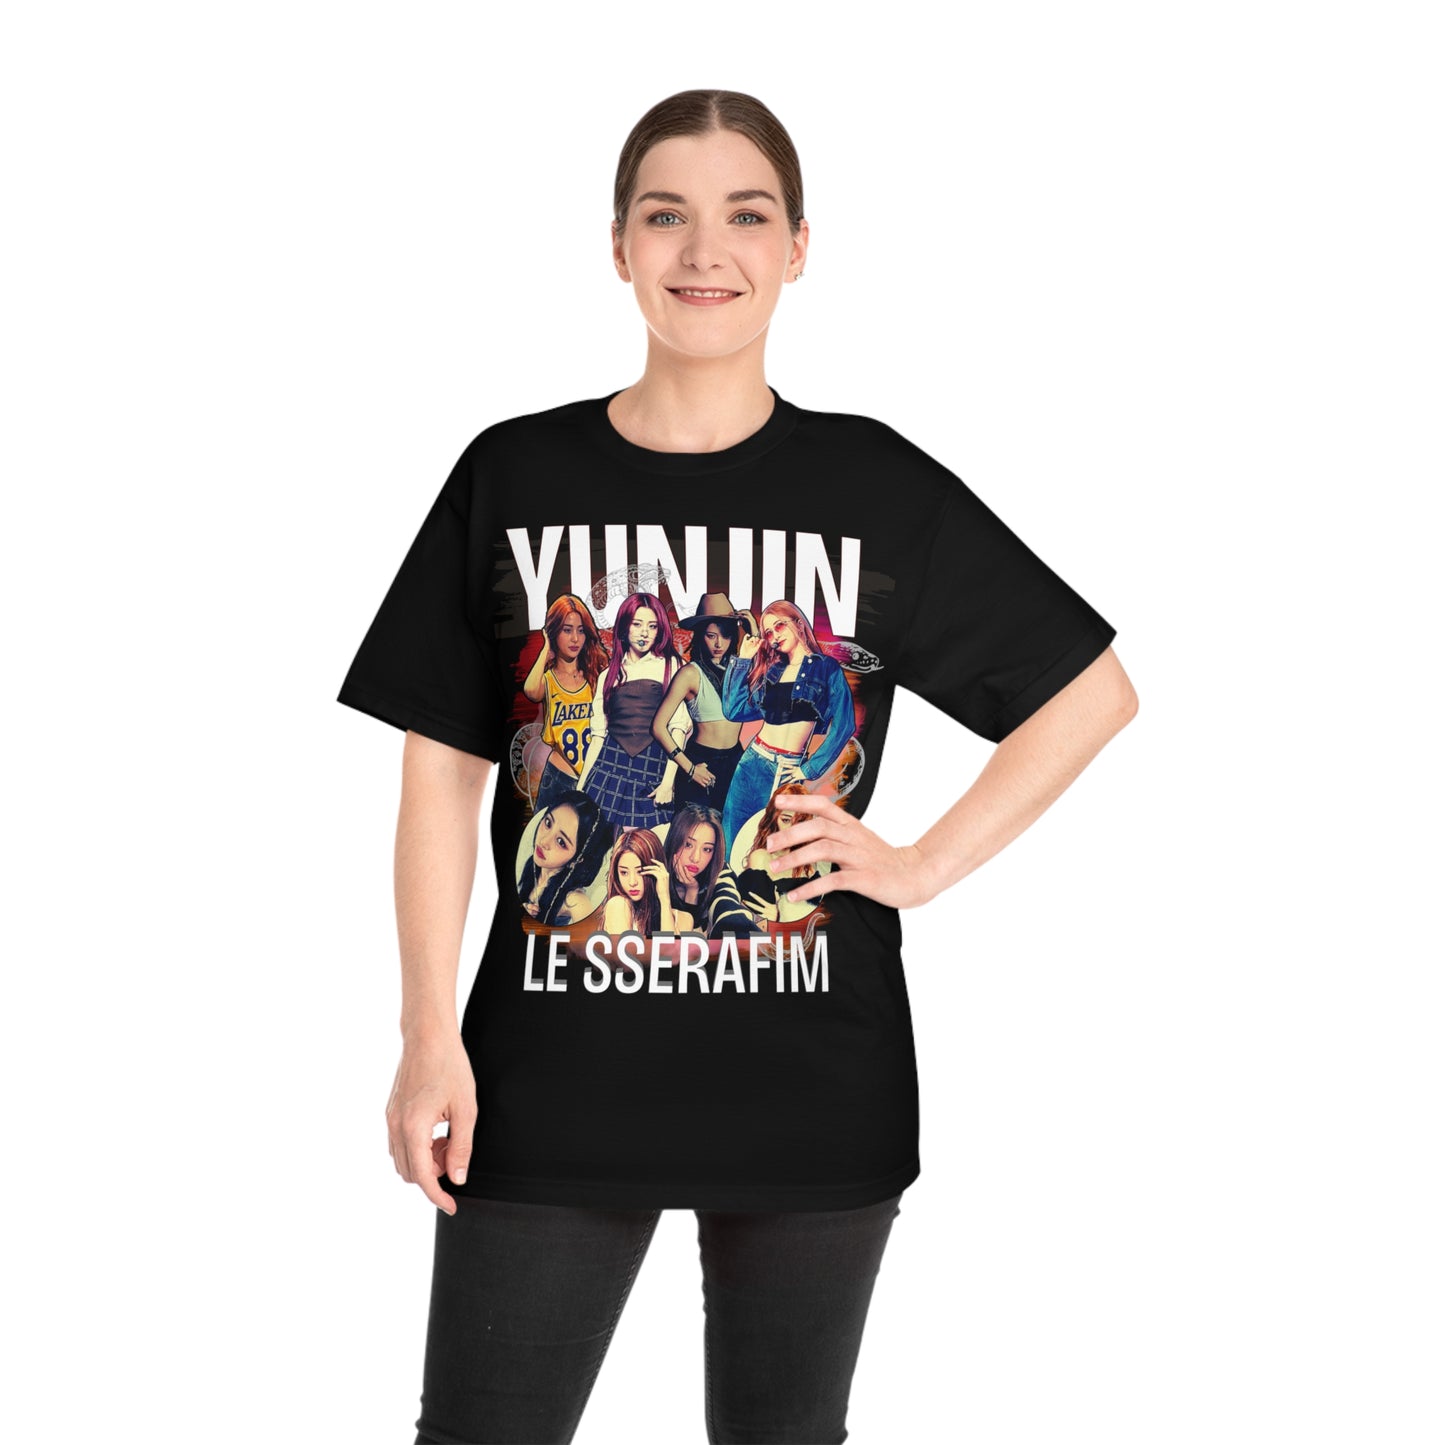 Lesserafim Yunjin graphic T-shirt